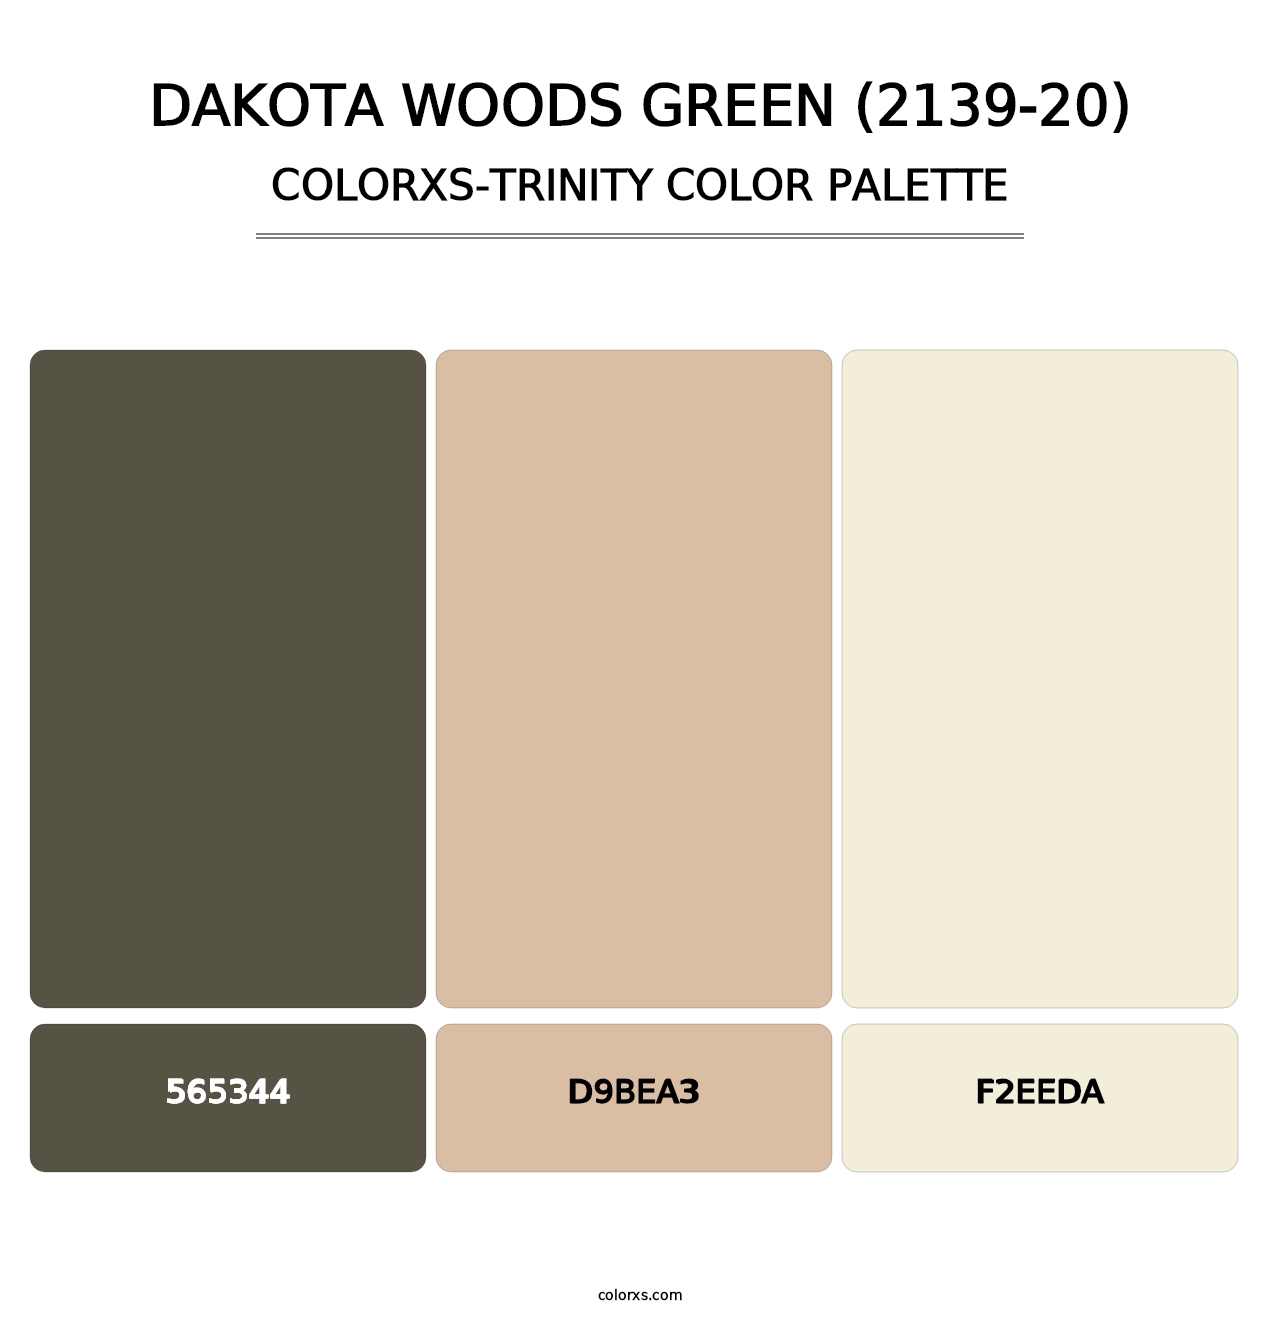 Dakota Woods Green (2139-20) - Colorxs Trinity Palette